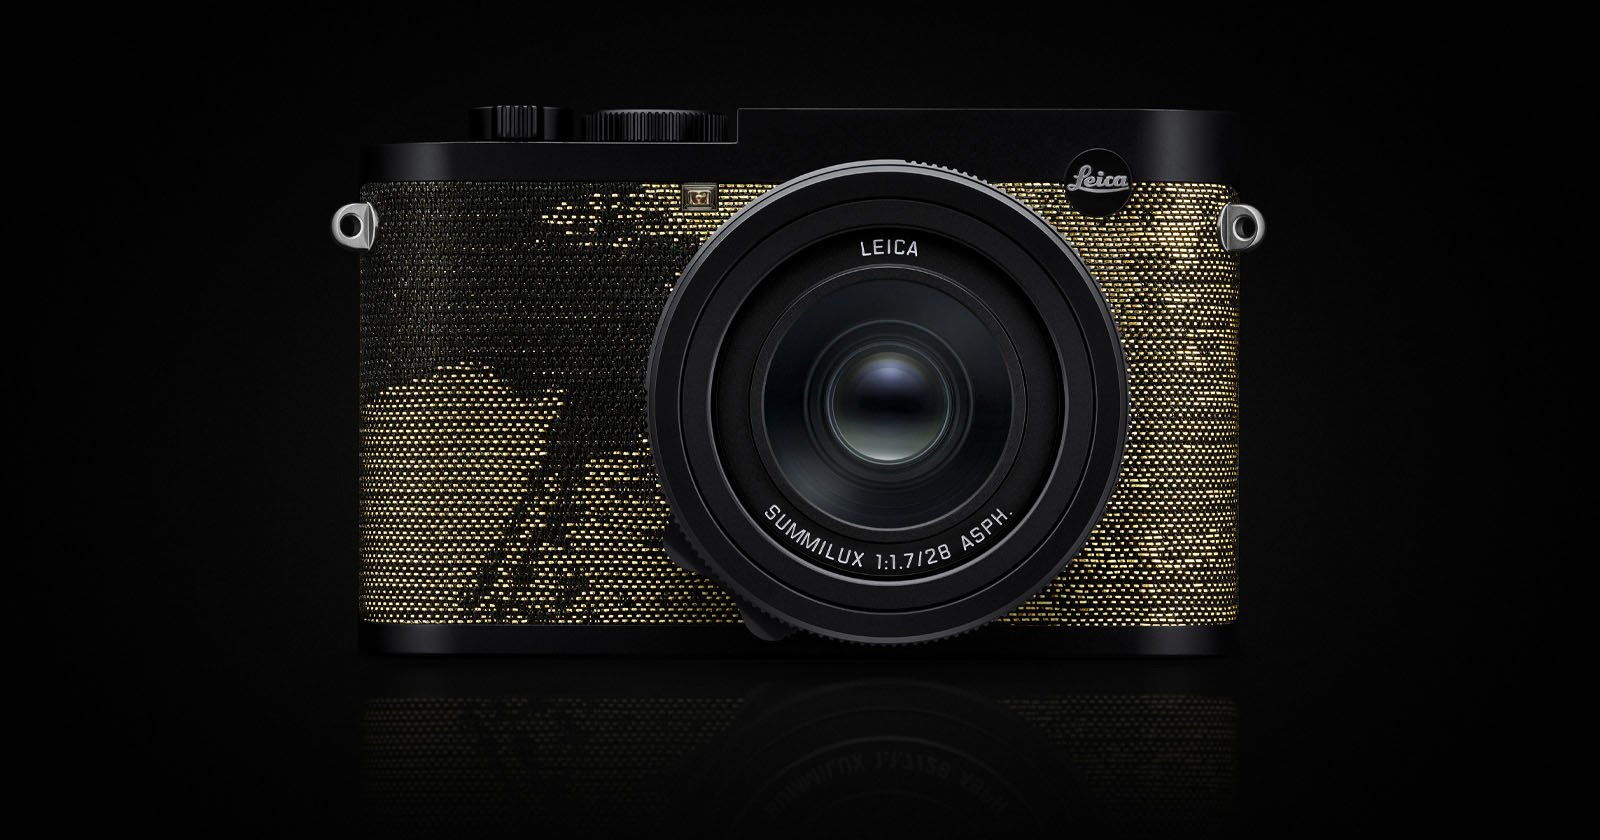  leica latest dawn edition camera collaboration seal 